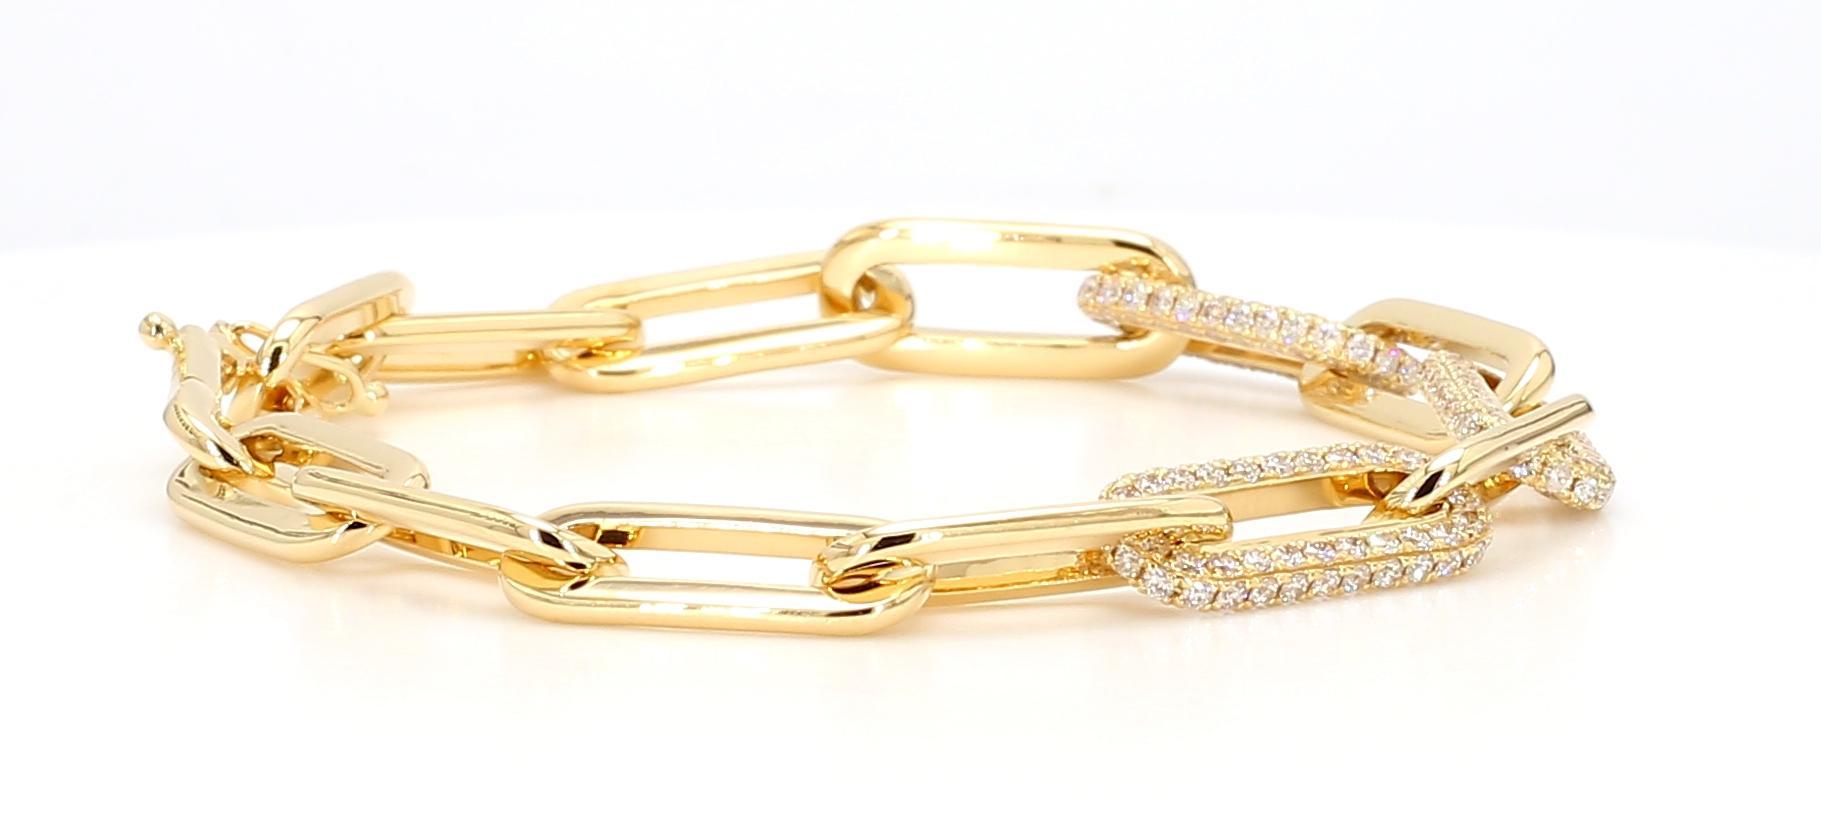 Natural White Round Diamond 2.01 Carat TW Yellow Gold Link Bracelet For Sale 2